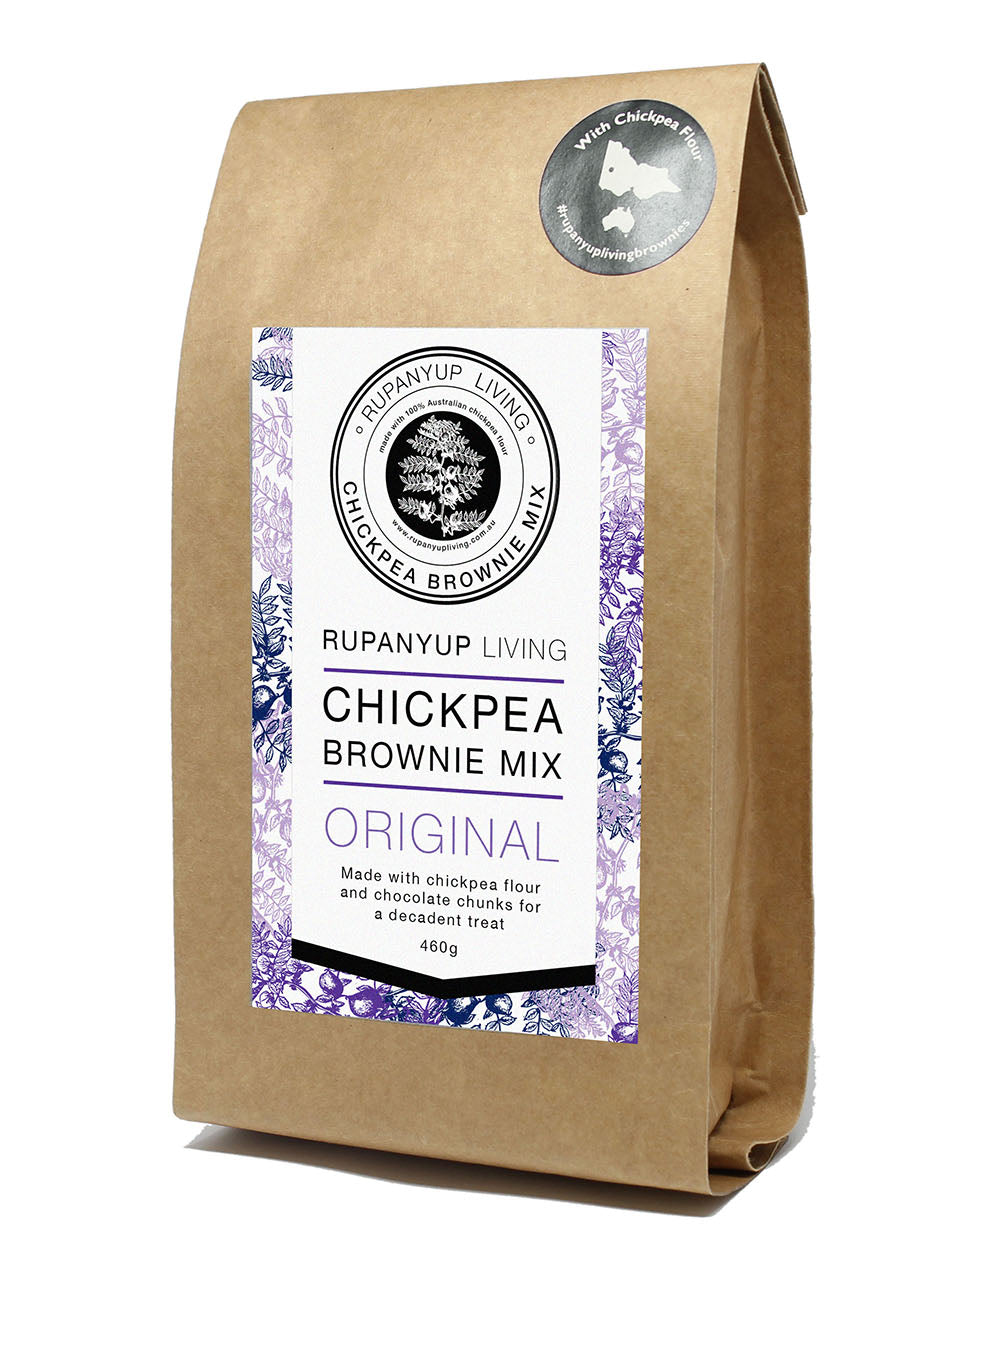 Chickpea Brownie Mix - Original